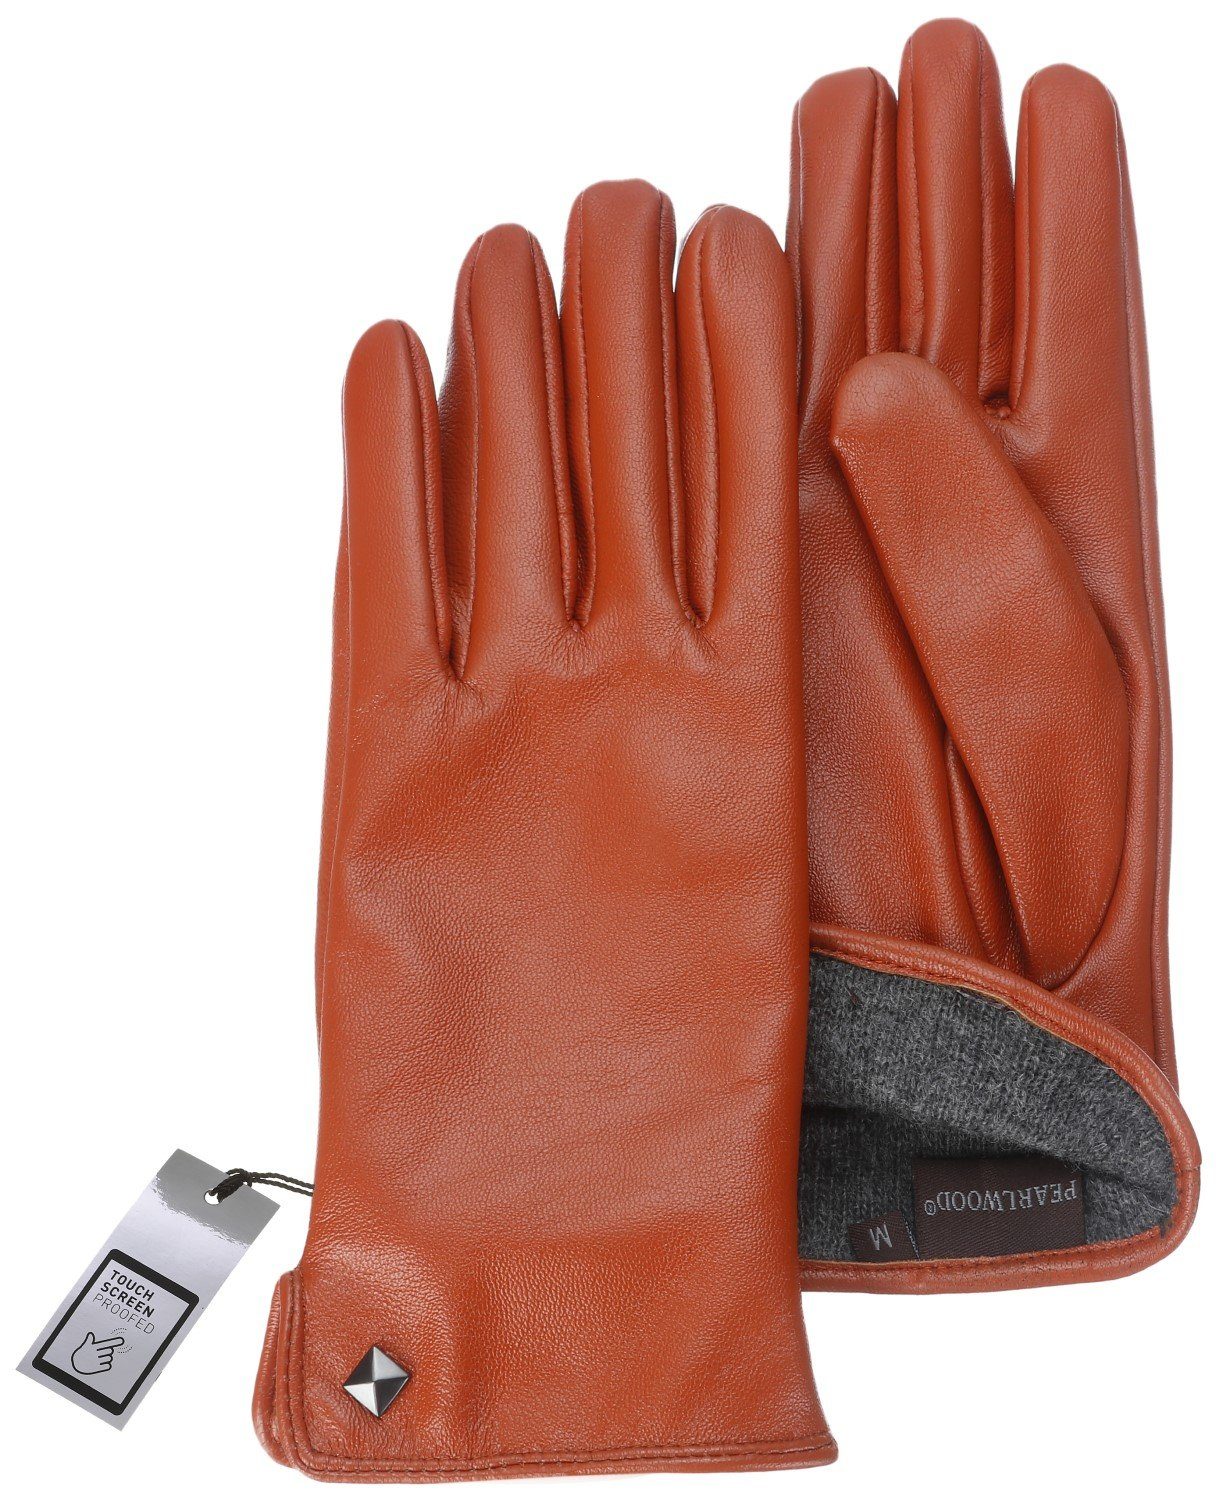 Meg orange Lederhandschuhe PEARLWOOD Woll-Mix-Futter 540 Touchscreen-Handschuhe